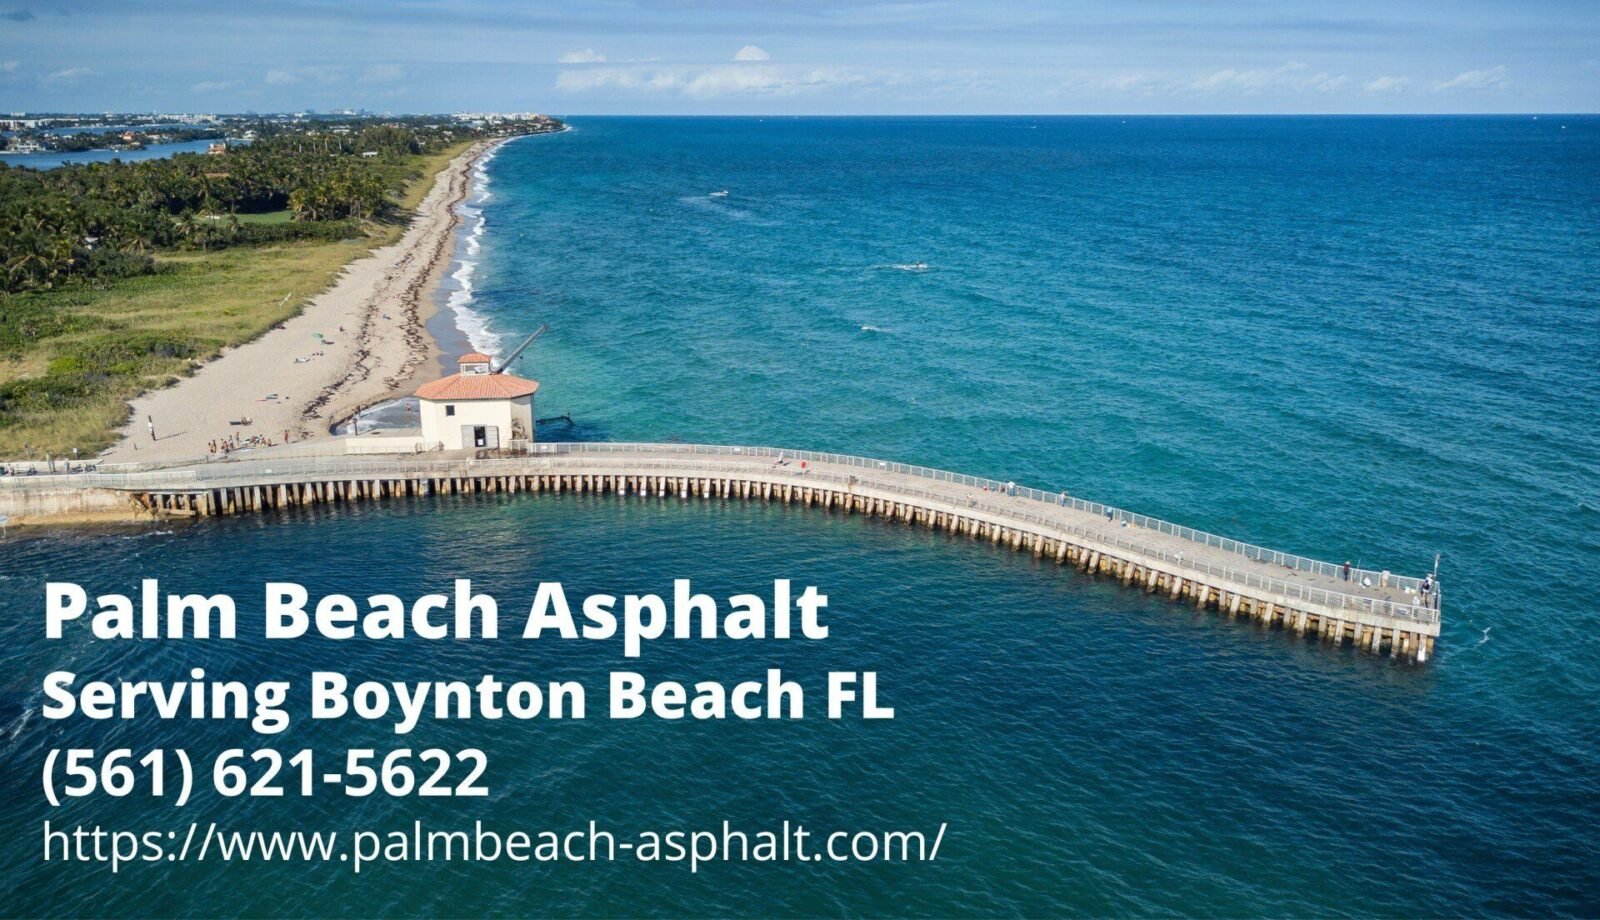 aerial view of Boynton Beach and text by Palm Beach Asphalt - an asphalt company serving Boynton Beach, FL